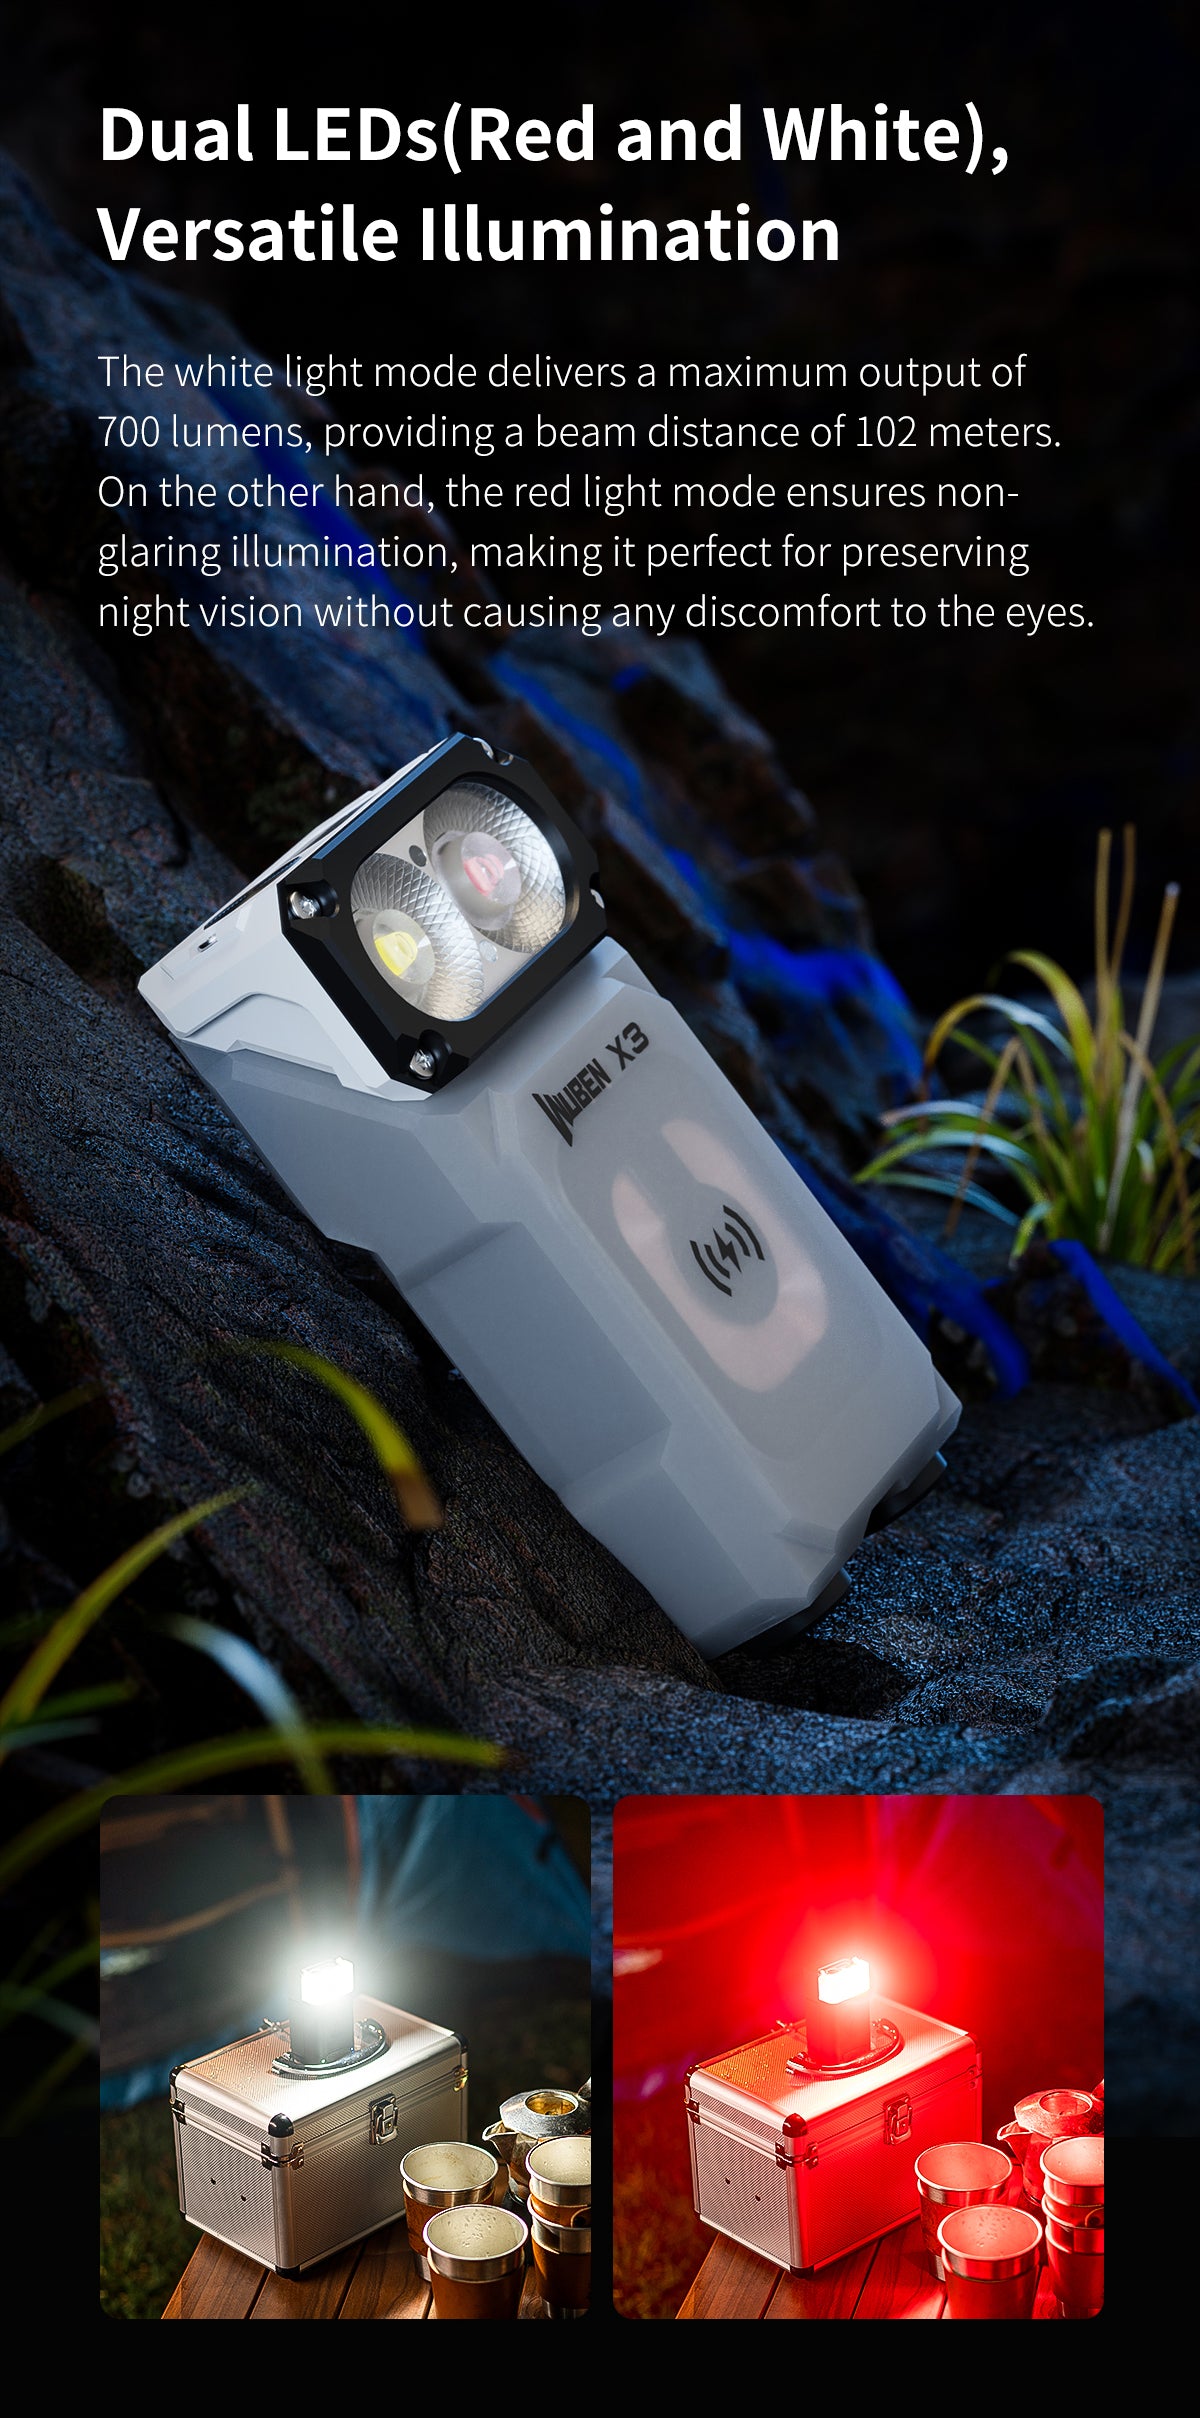 Lightok X3 Owl EDC Flashlight - Your Best Owl Light Choice